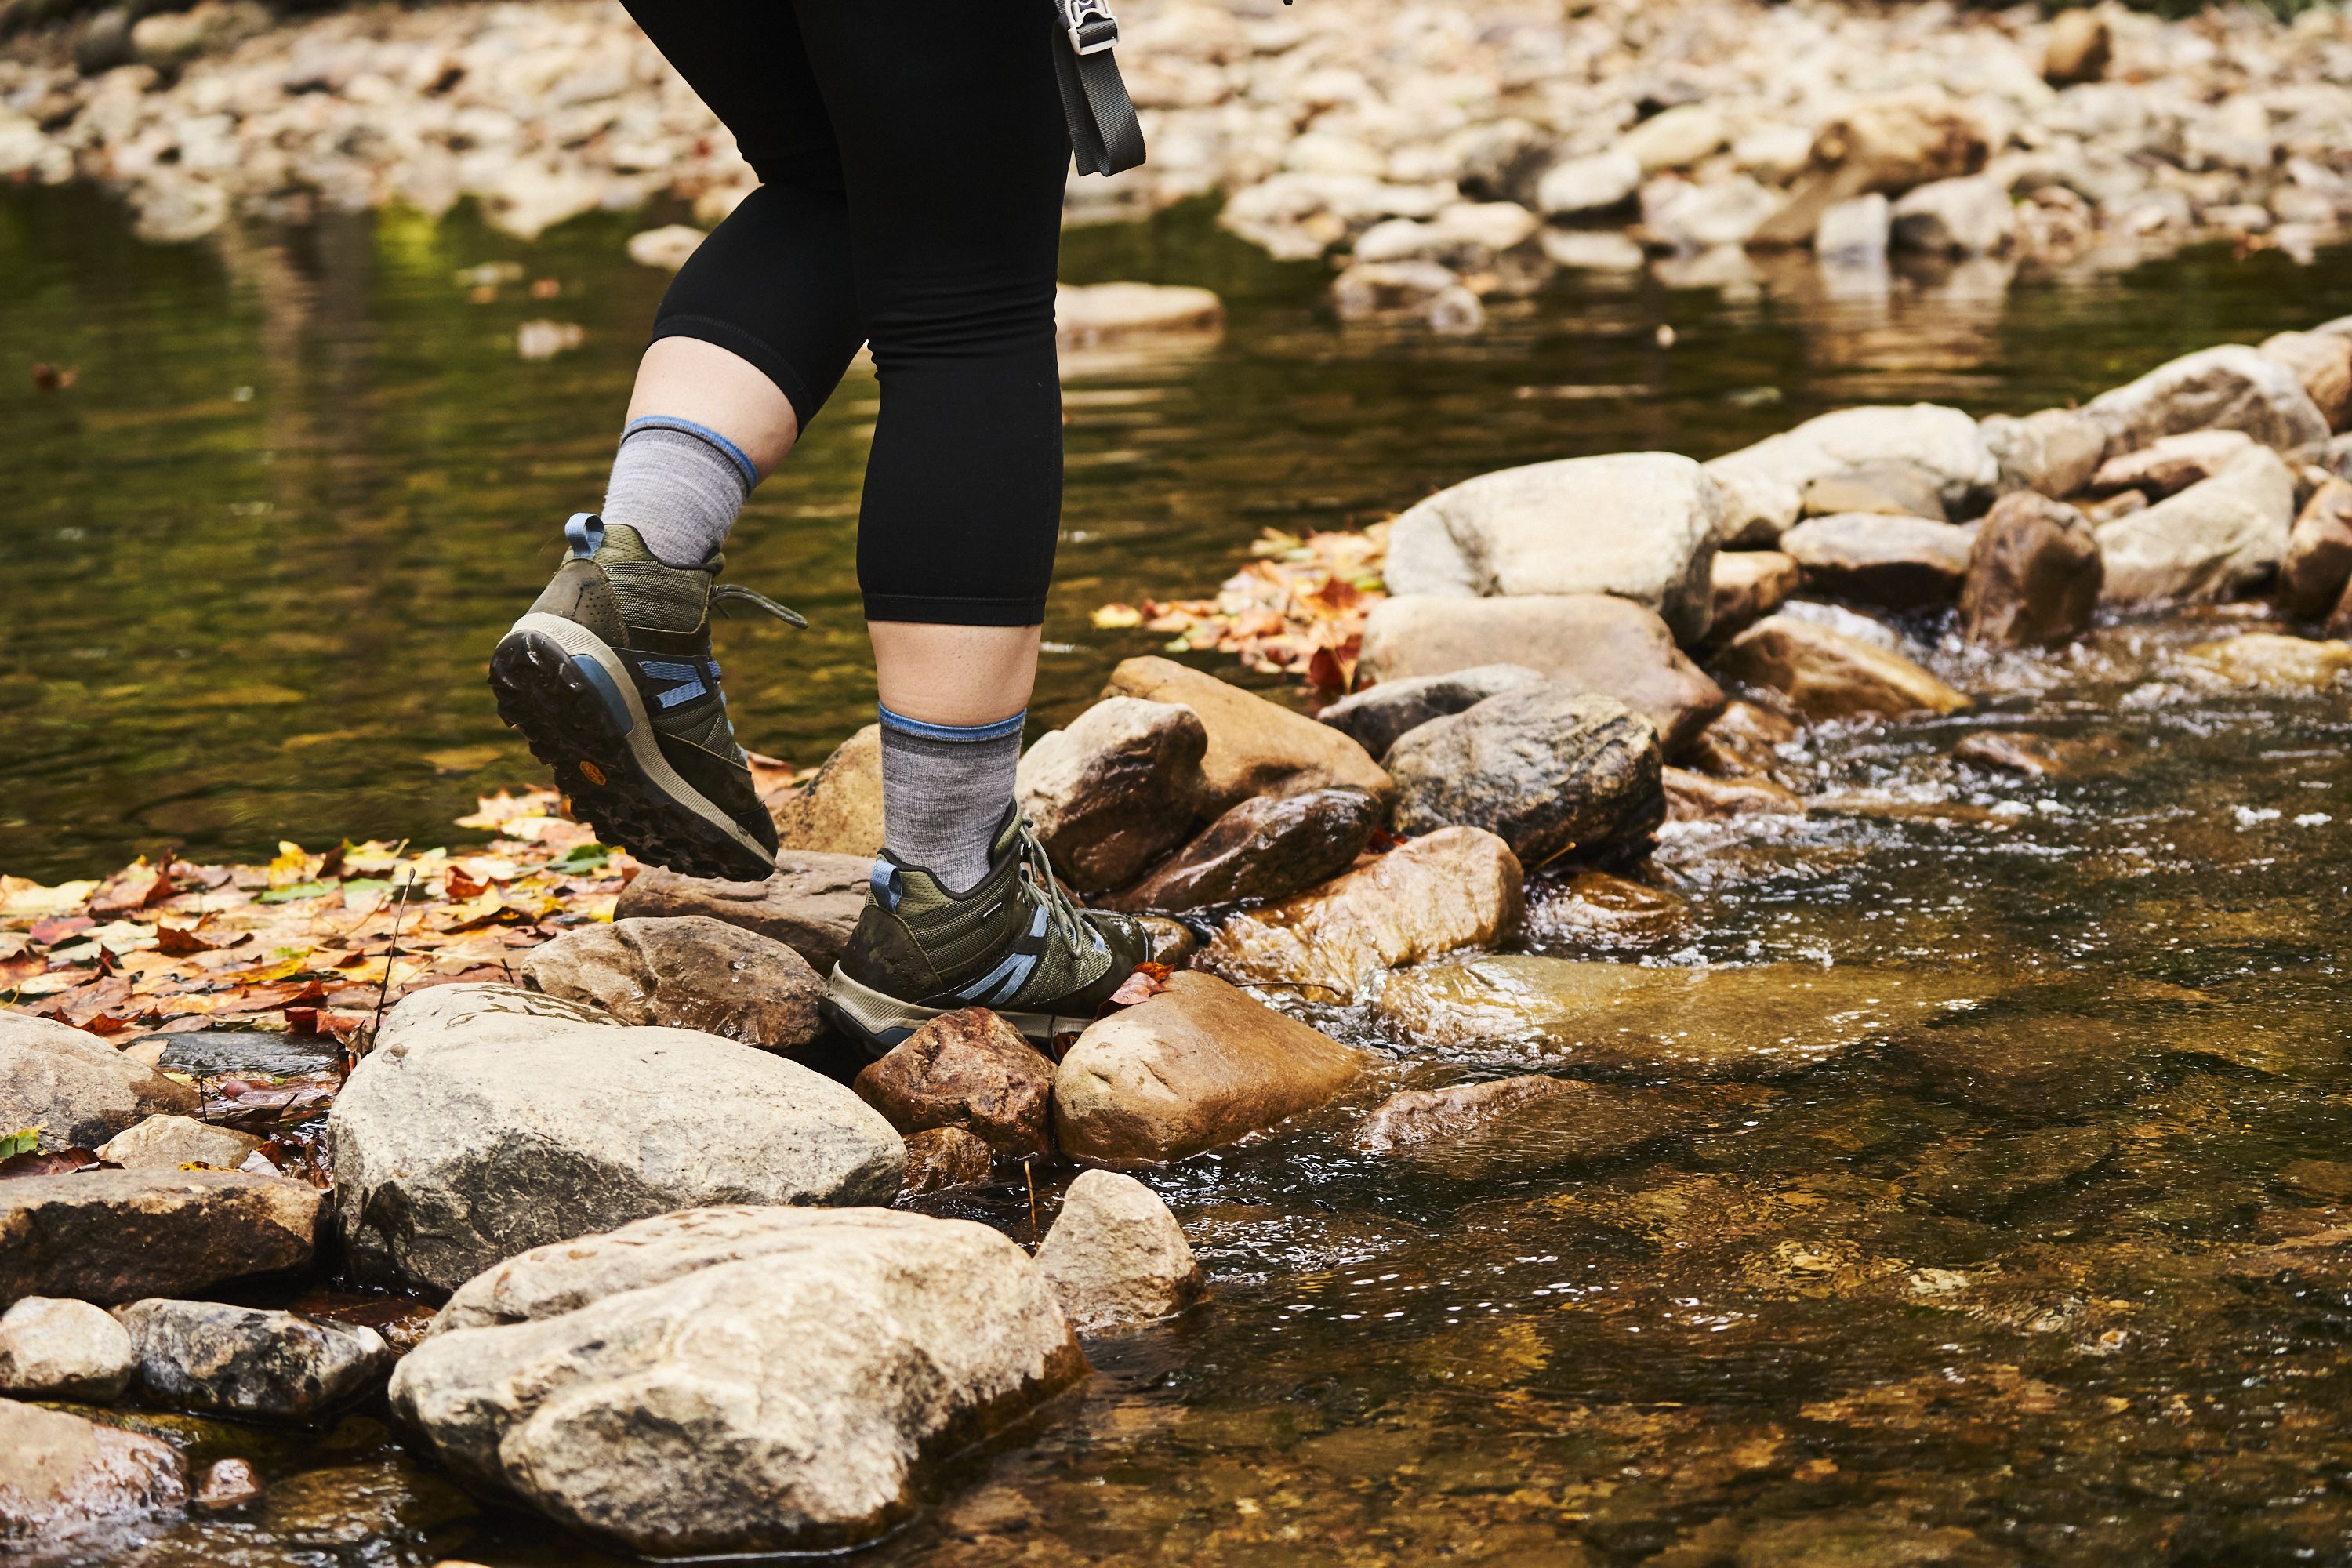 Best Waterproof Hiking Boots 2021